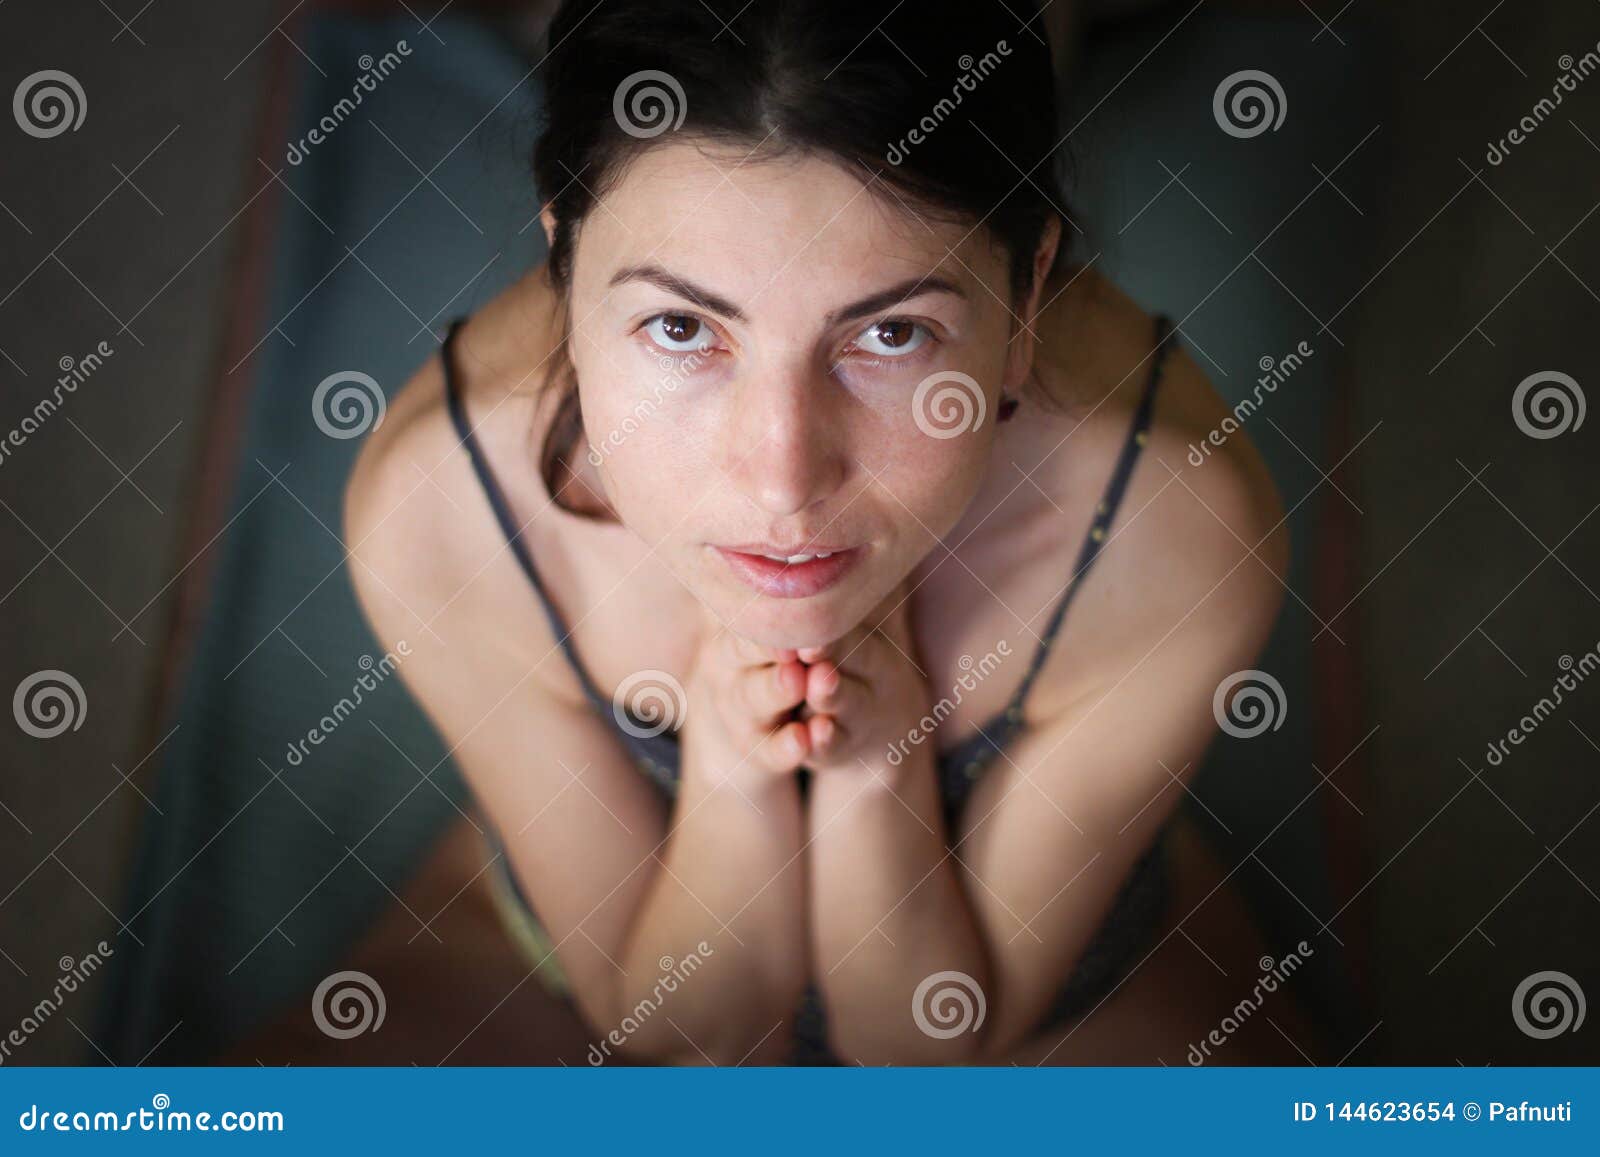 gorgeous young europian female on dark background, holding hands in namaste or prayer, keeping eyes open, while practising yoga